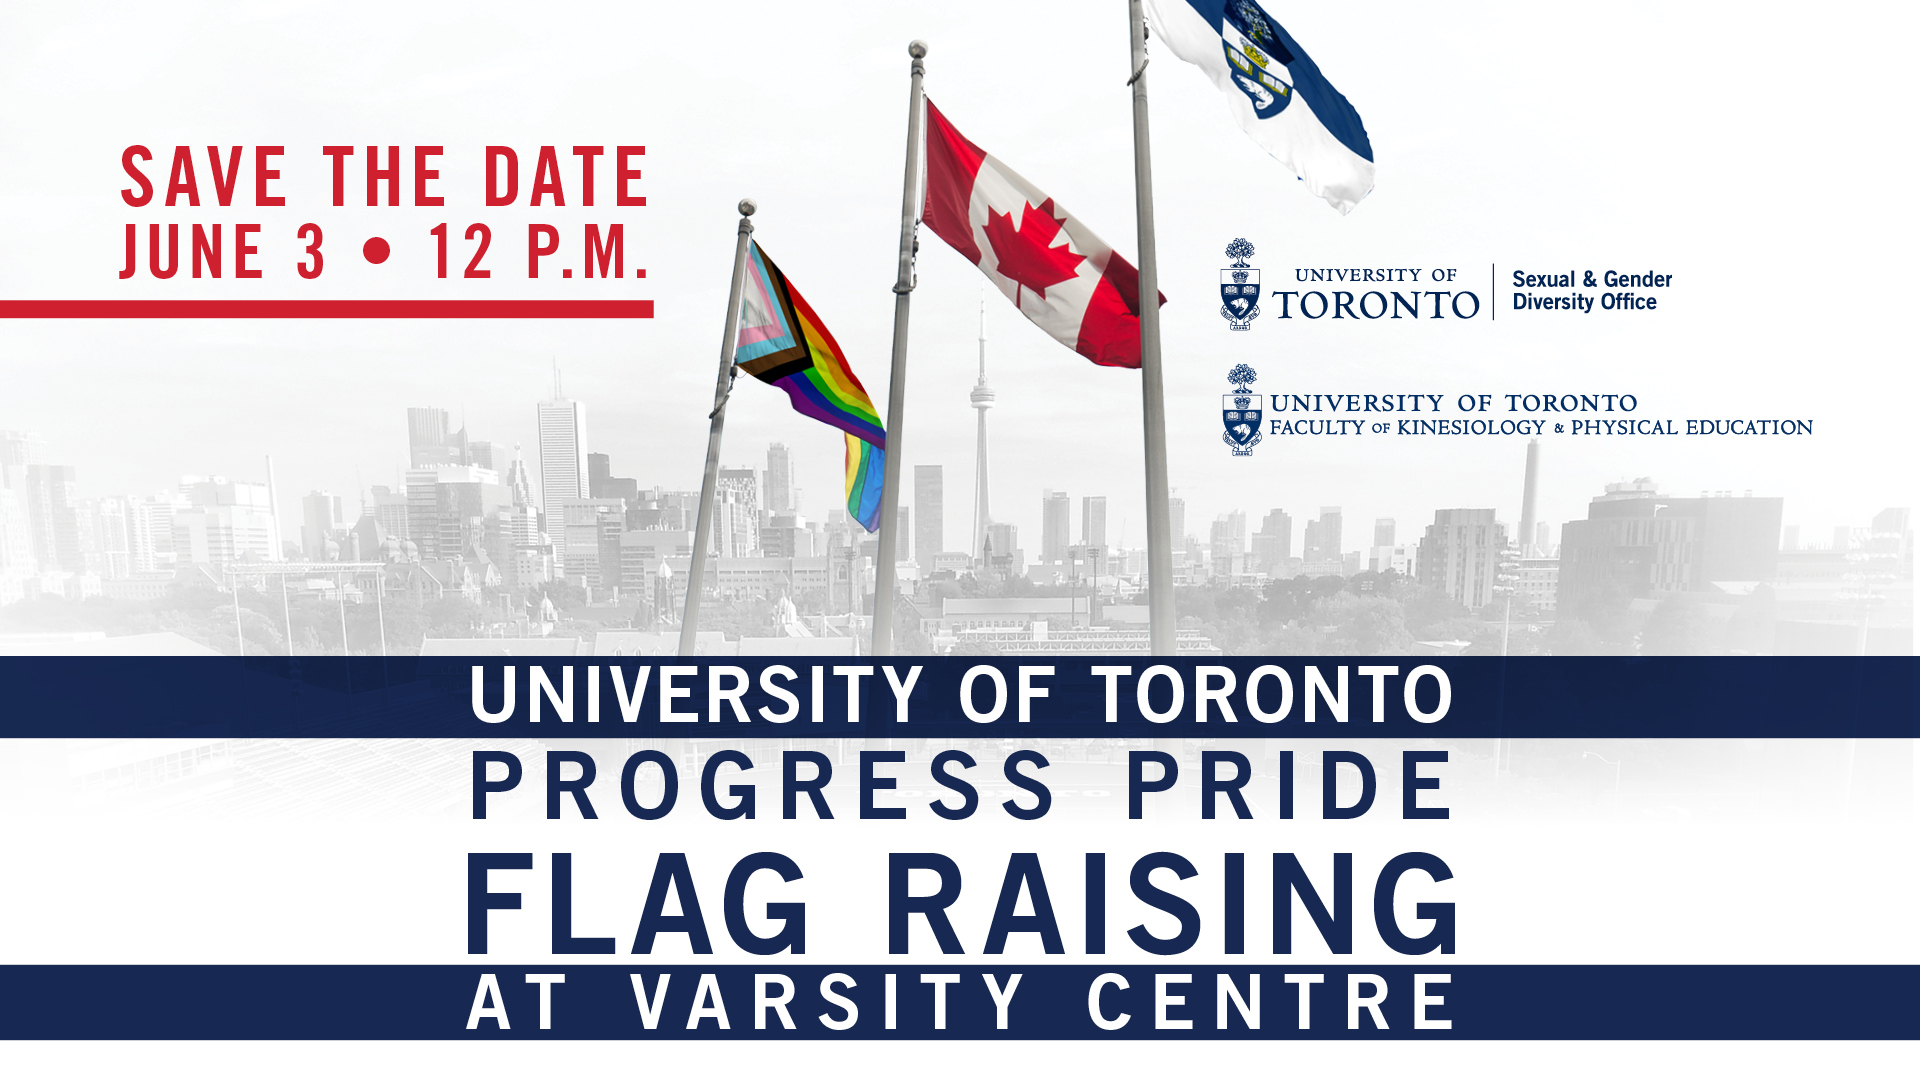 Join the University of Toronto Progress Pride Flag Raising at Varsity Centre on June 3 at 12 p.m.